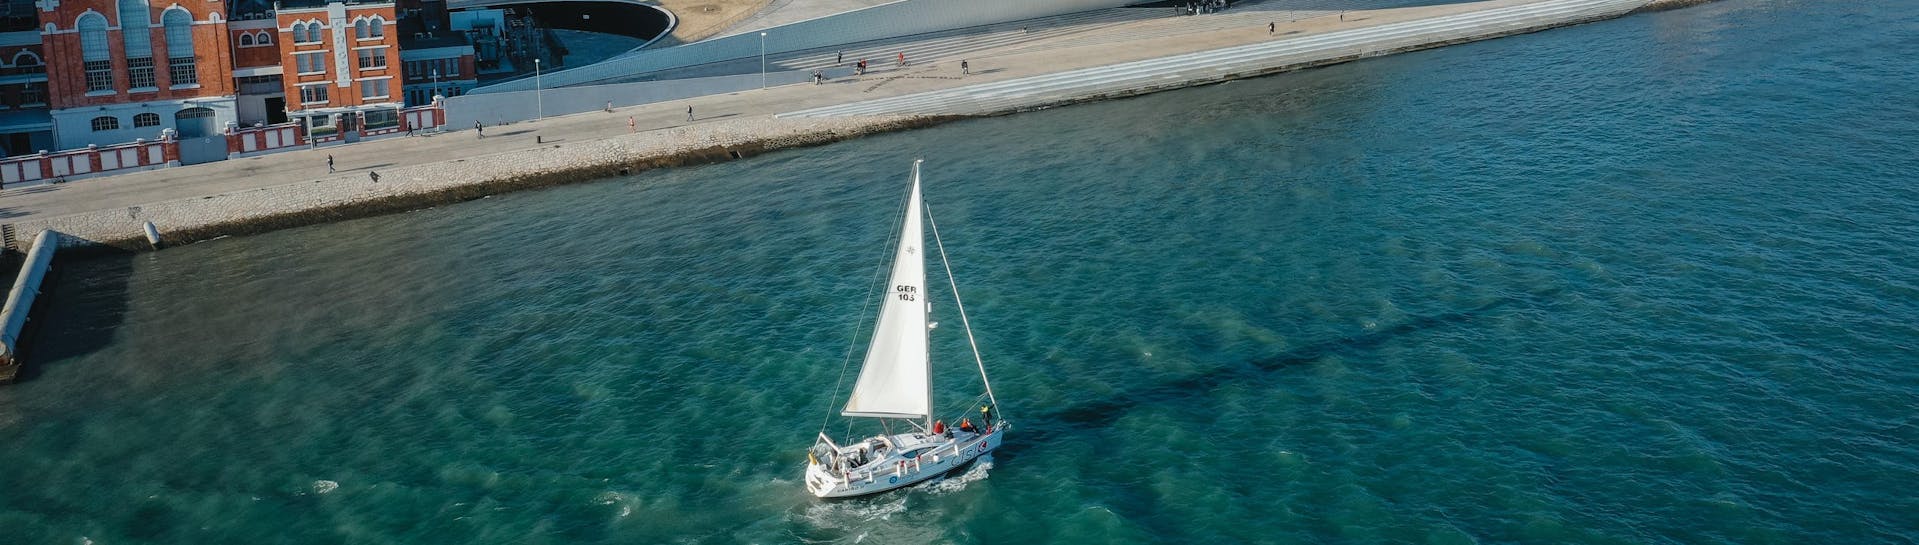 Gita in barca a vela da Doca de Alcântara a Tago con visita turistica.